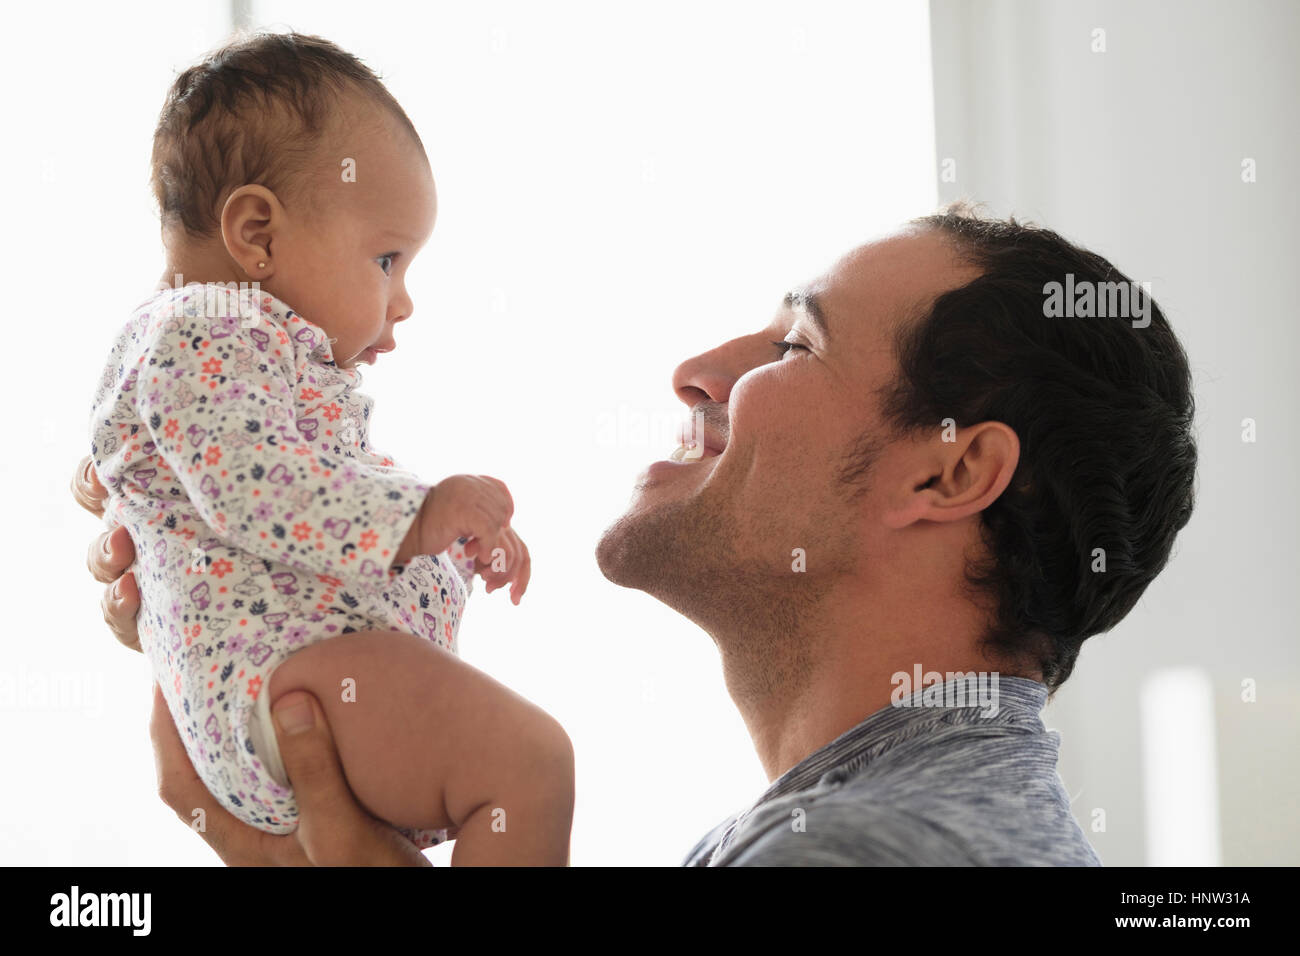 Hispanic father lifting baby daughter Stock Photo